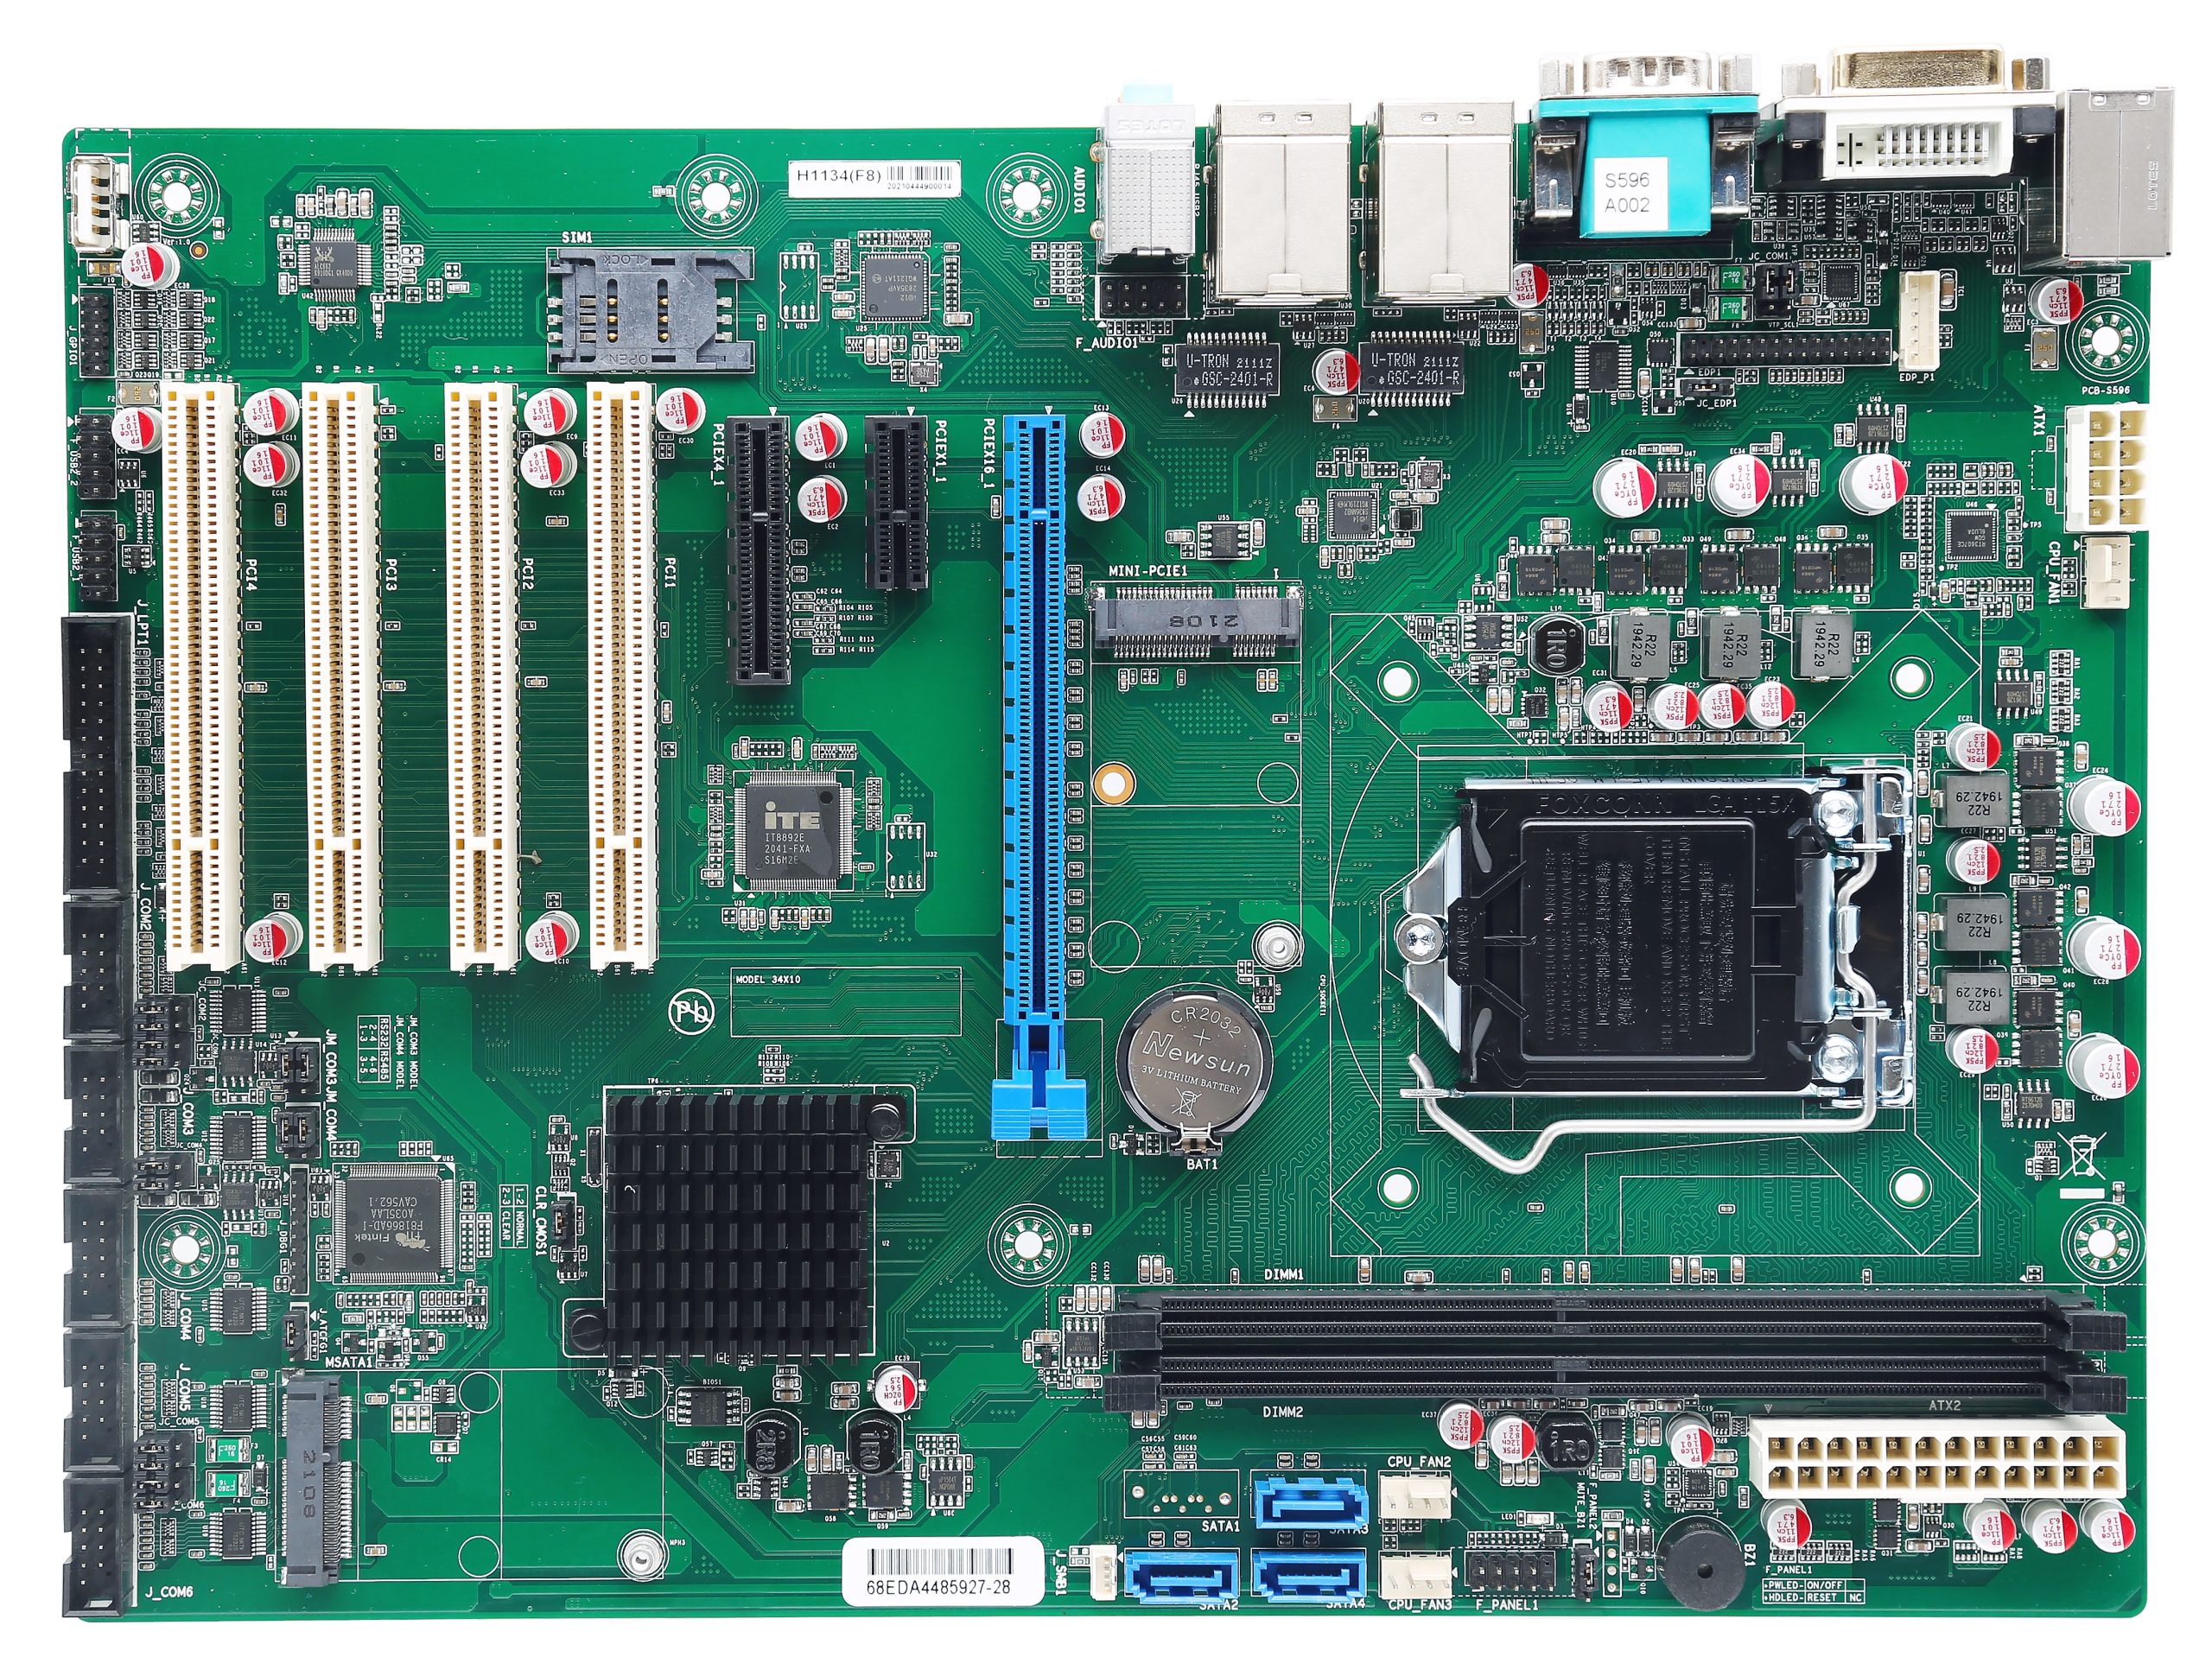 DMB-AH110 Industrial Motherboard with Intel® 6/7/8/9th Generation Core™ i3/i5/i7 CPU, H110 Chipset, 3x PCIe, 4x PCI, 6x COM, 9x USB, 2x LAN